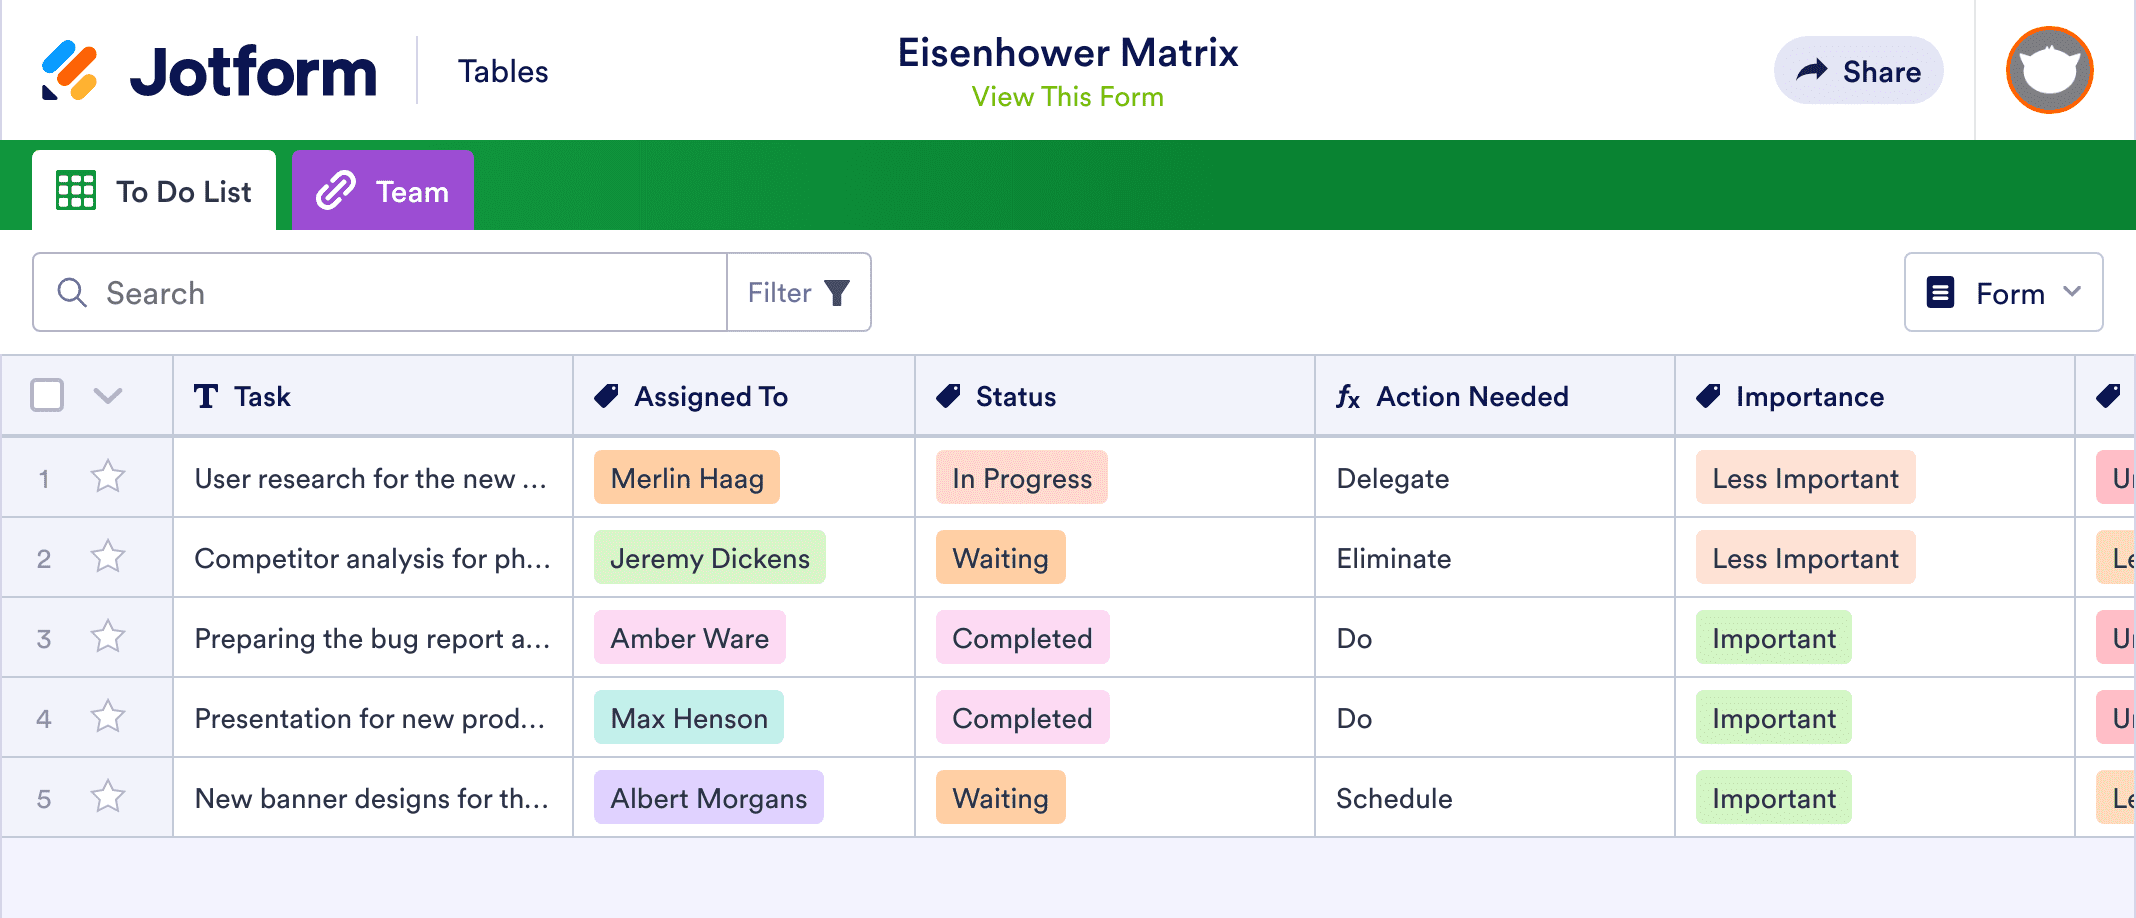 Eisenhower Matrix Template | Jotform Tables